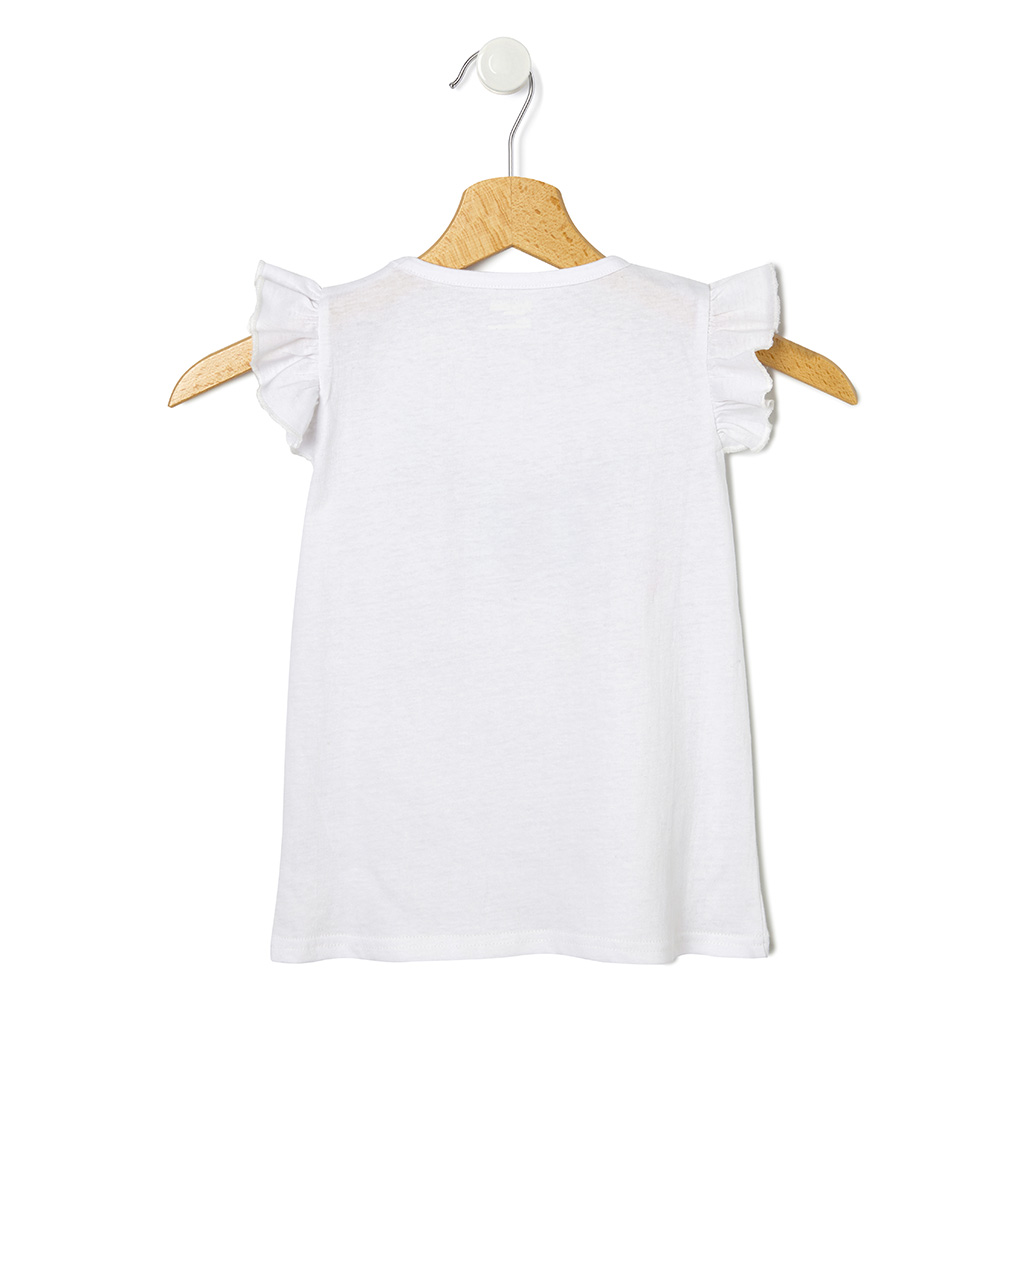 T-shirt jersey λευκό με στάμπα πεταλούδα για κορίτσι - Prénatal